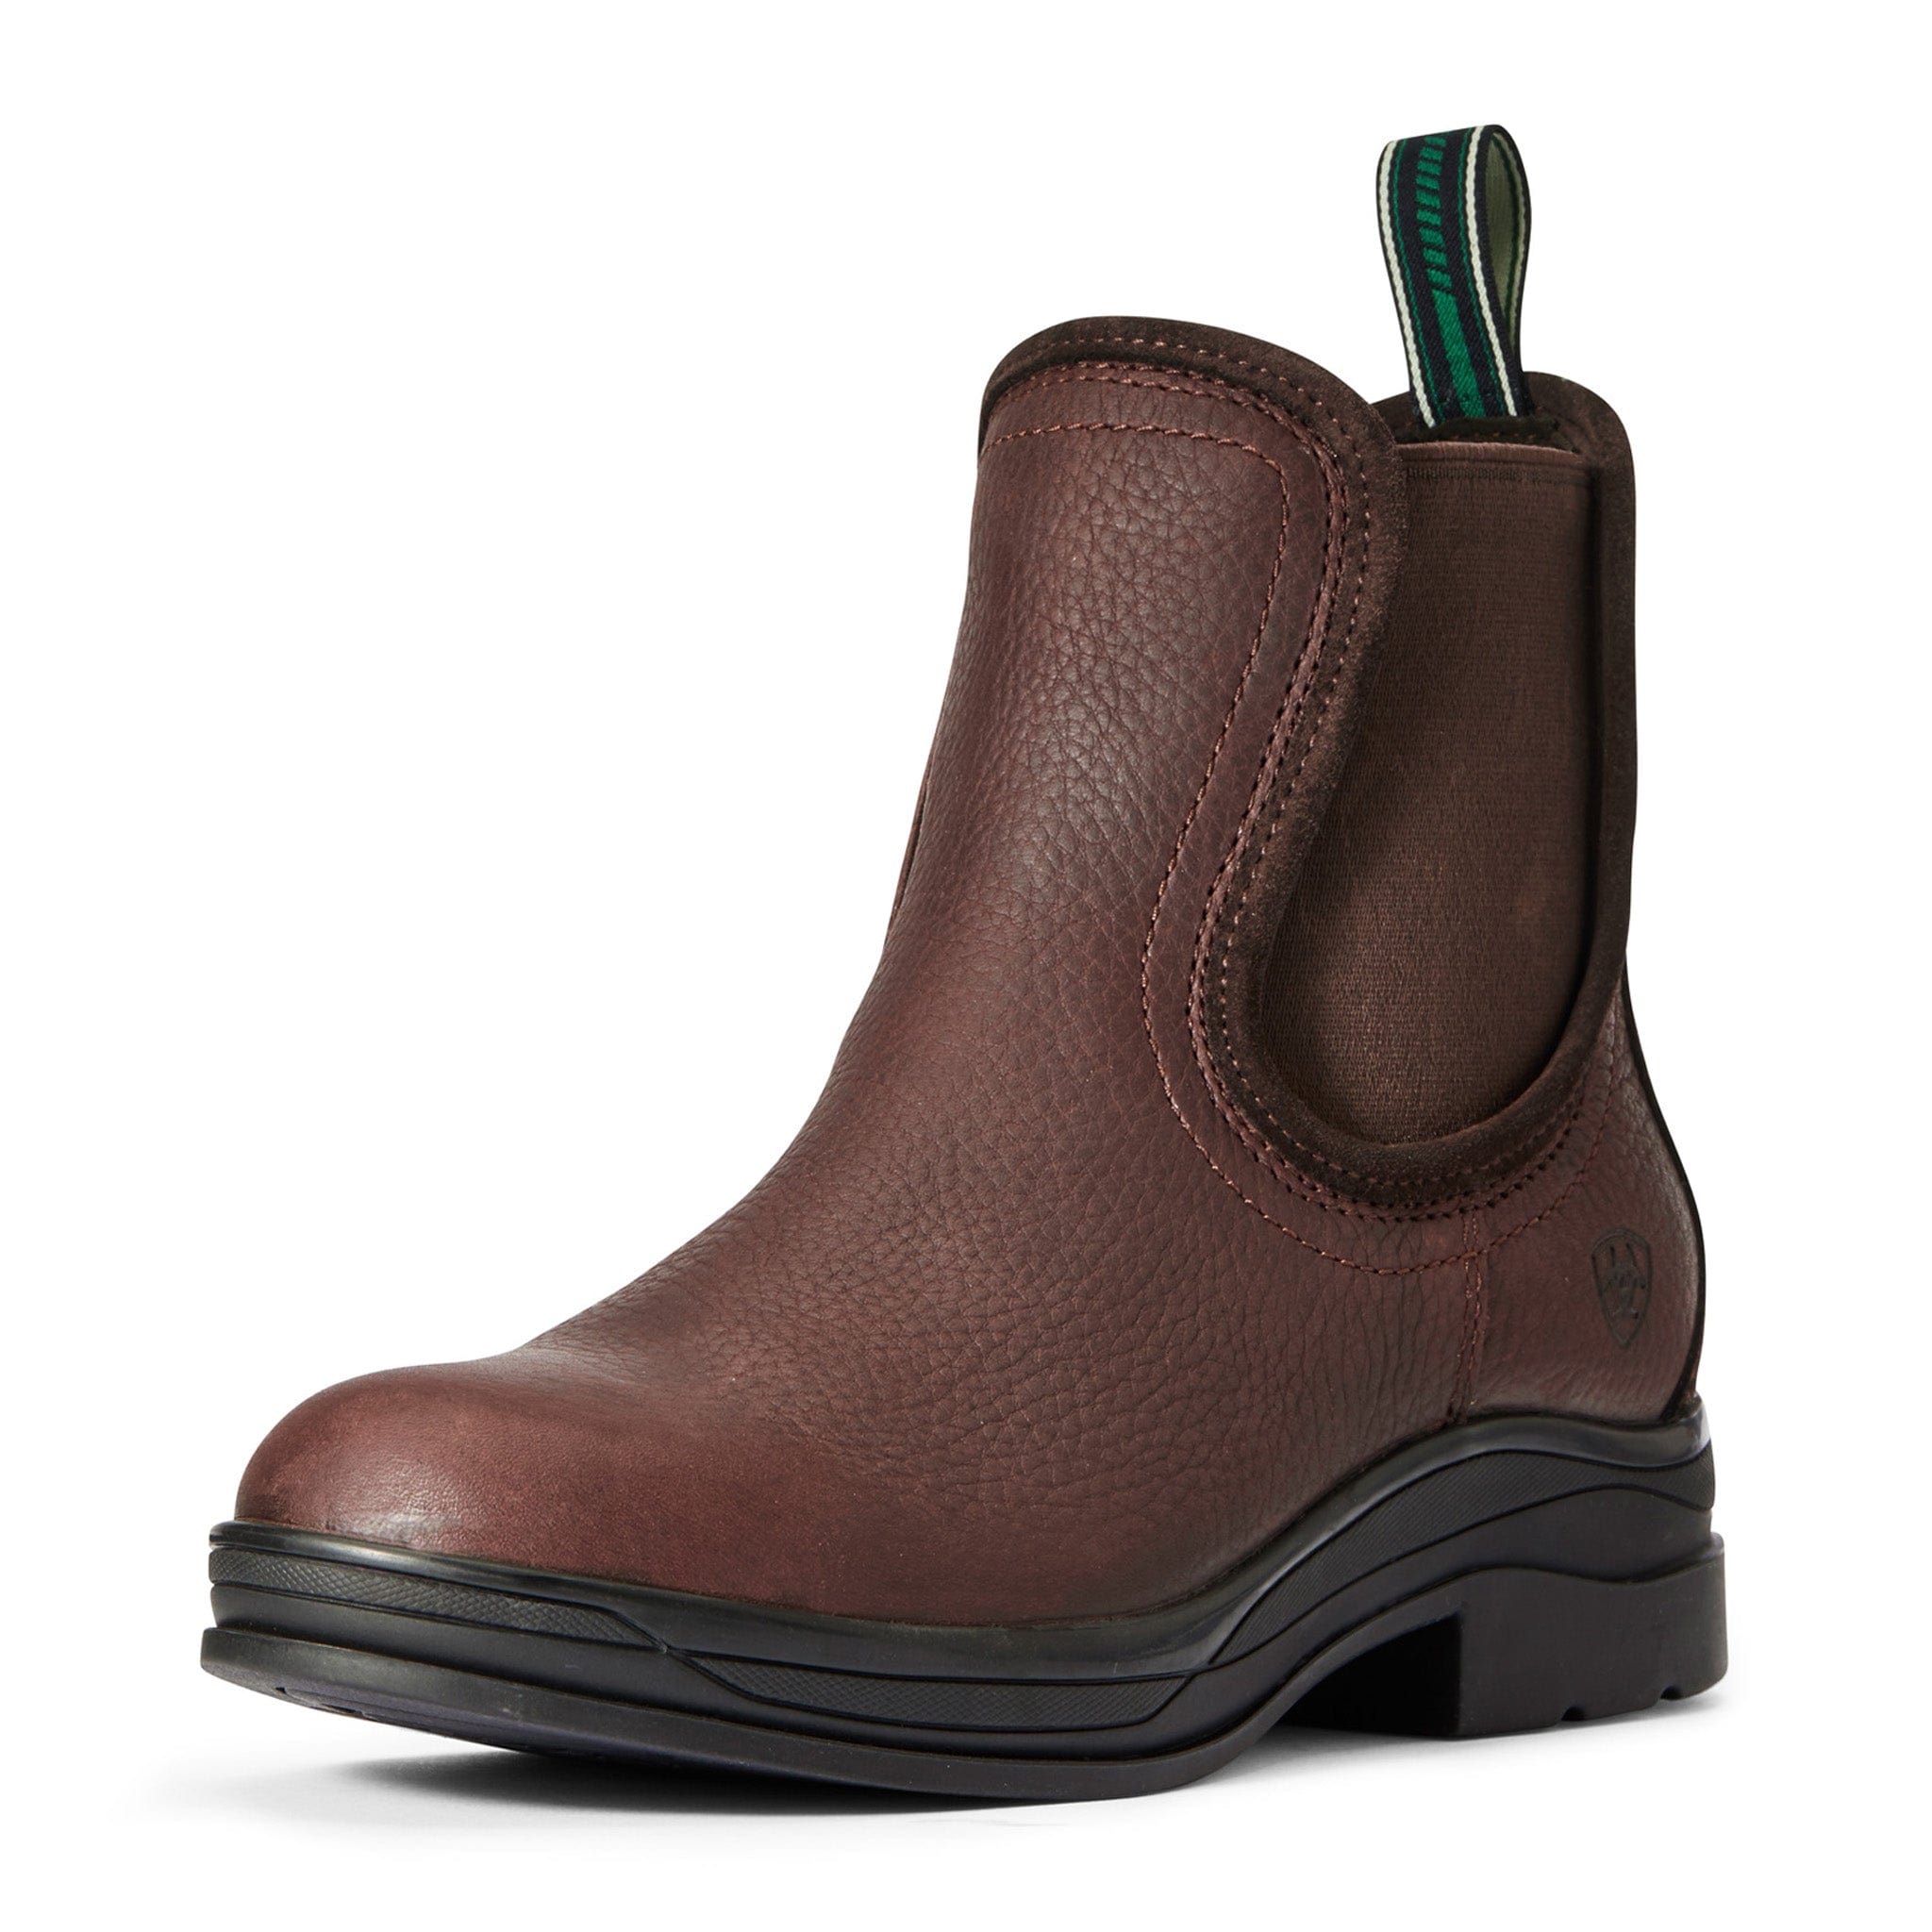 Ariat Keswick Waterproof Paddock Boots 10034421 Dark Brown Front Side View